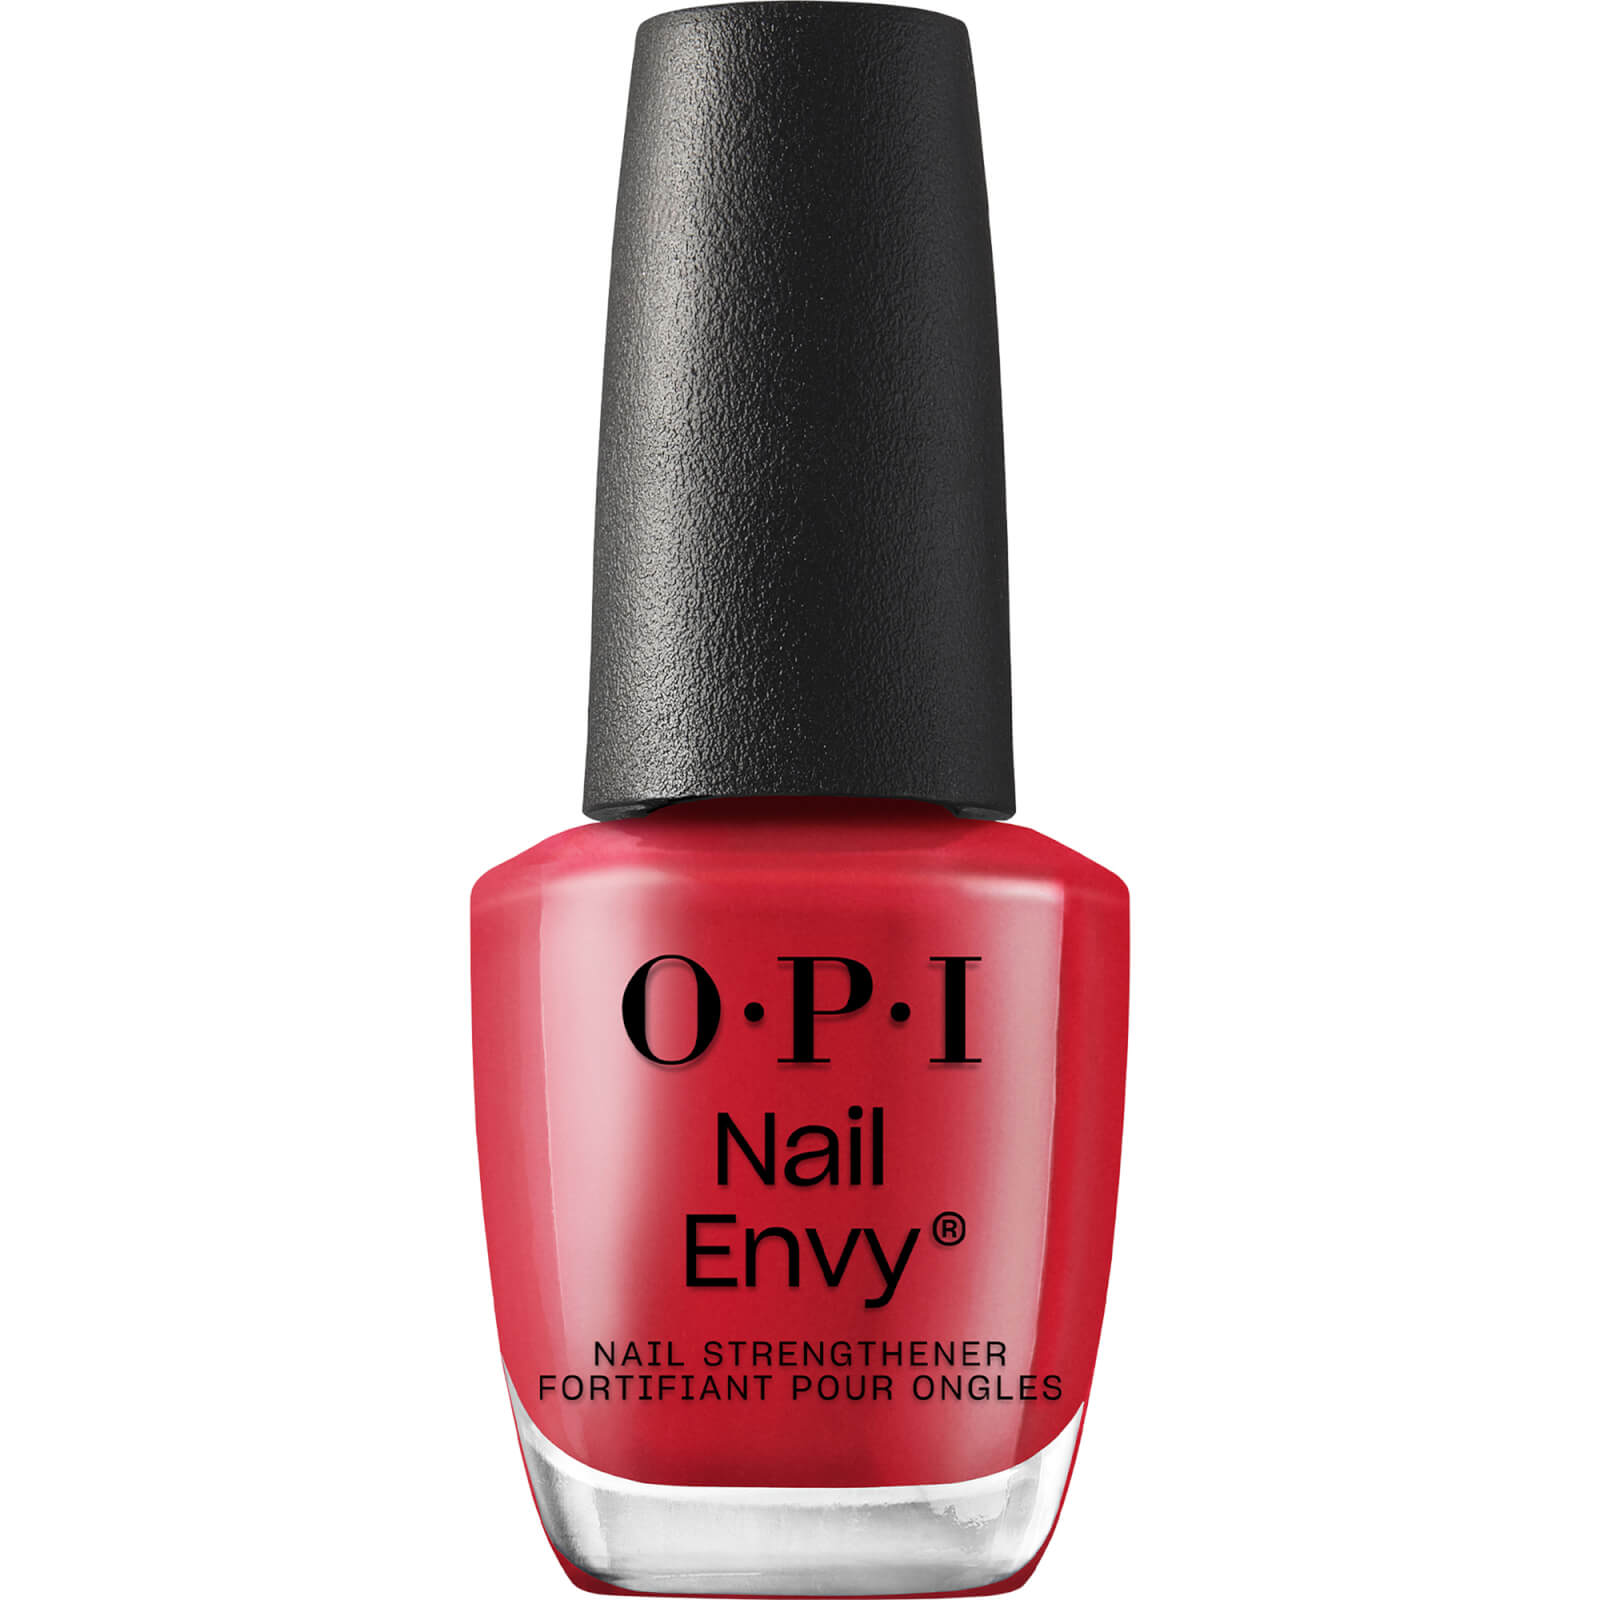 Image of OPI Nail Envy Strengthener Treatment Nail Polish - Big Apple Red 15ml